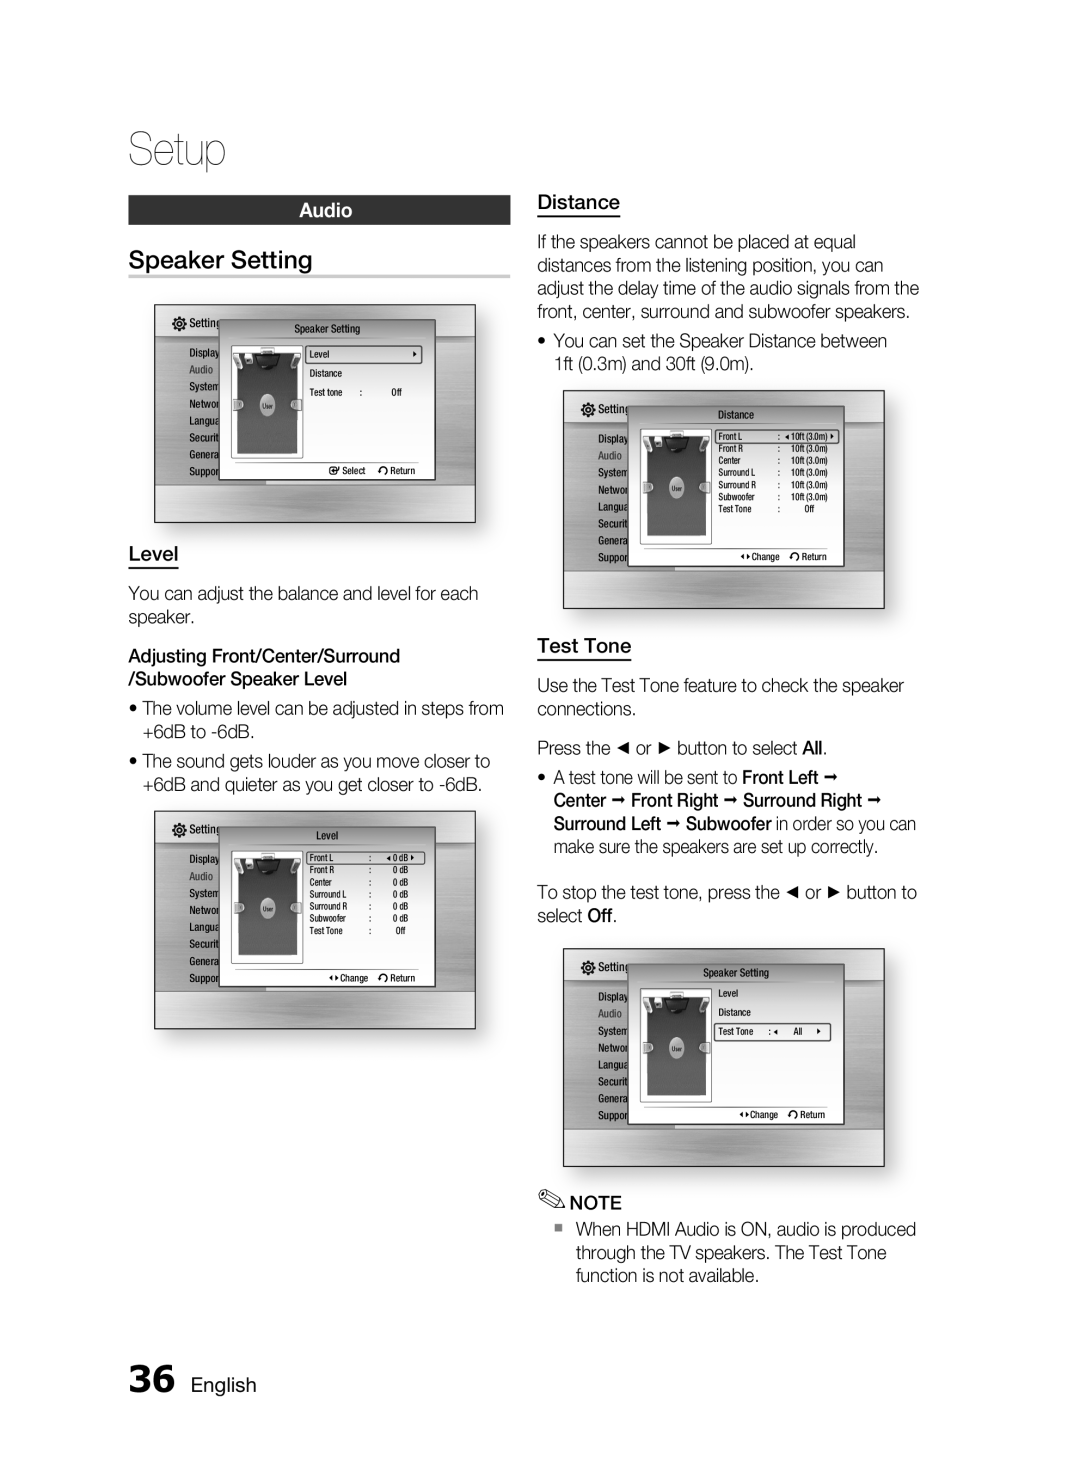 Samsung C6600 user manual Speaker Setting, Audio, Level, Distance, Test Tone, English, Setup 